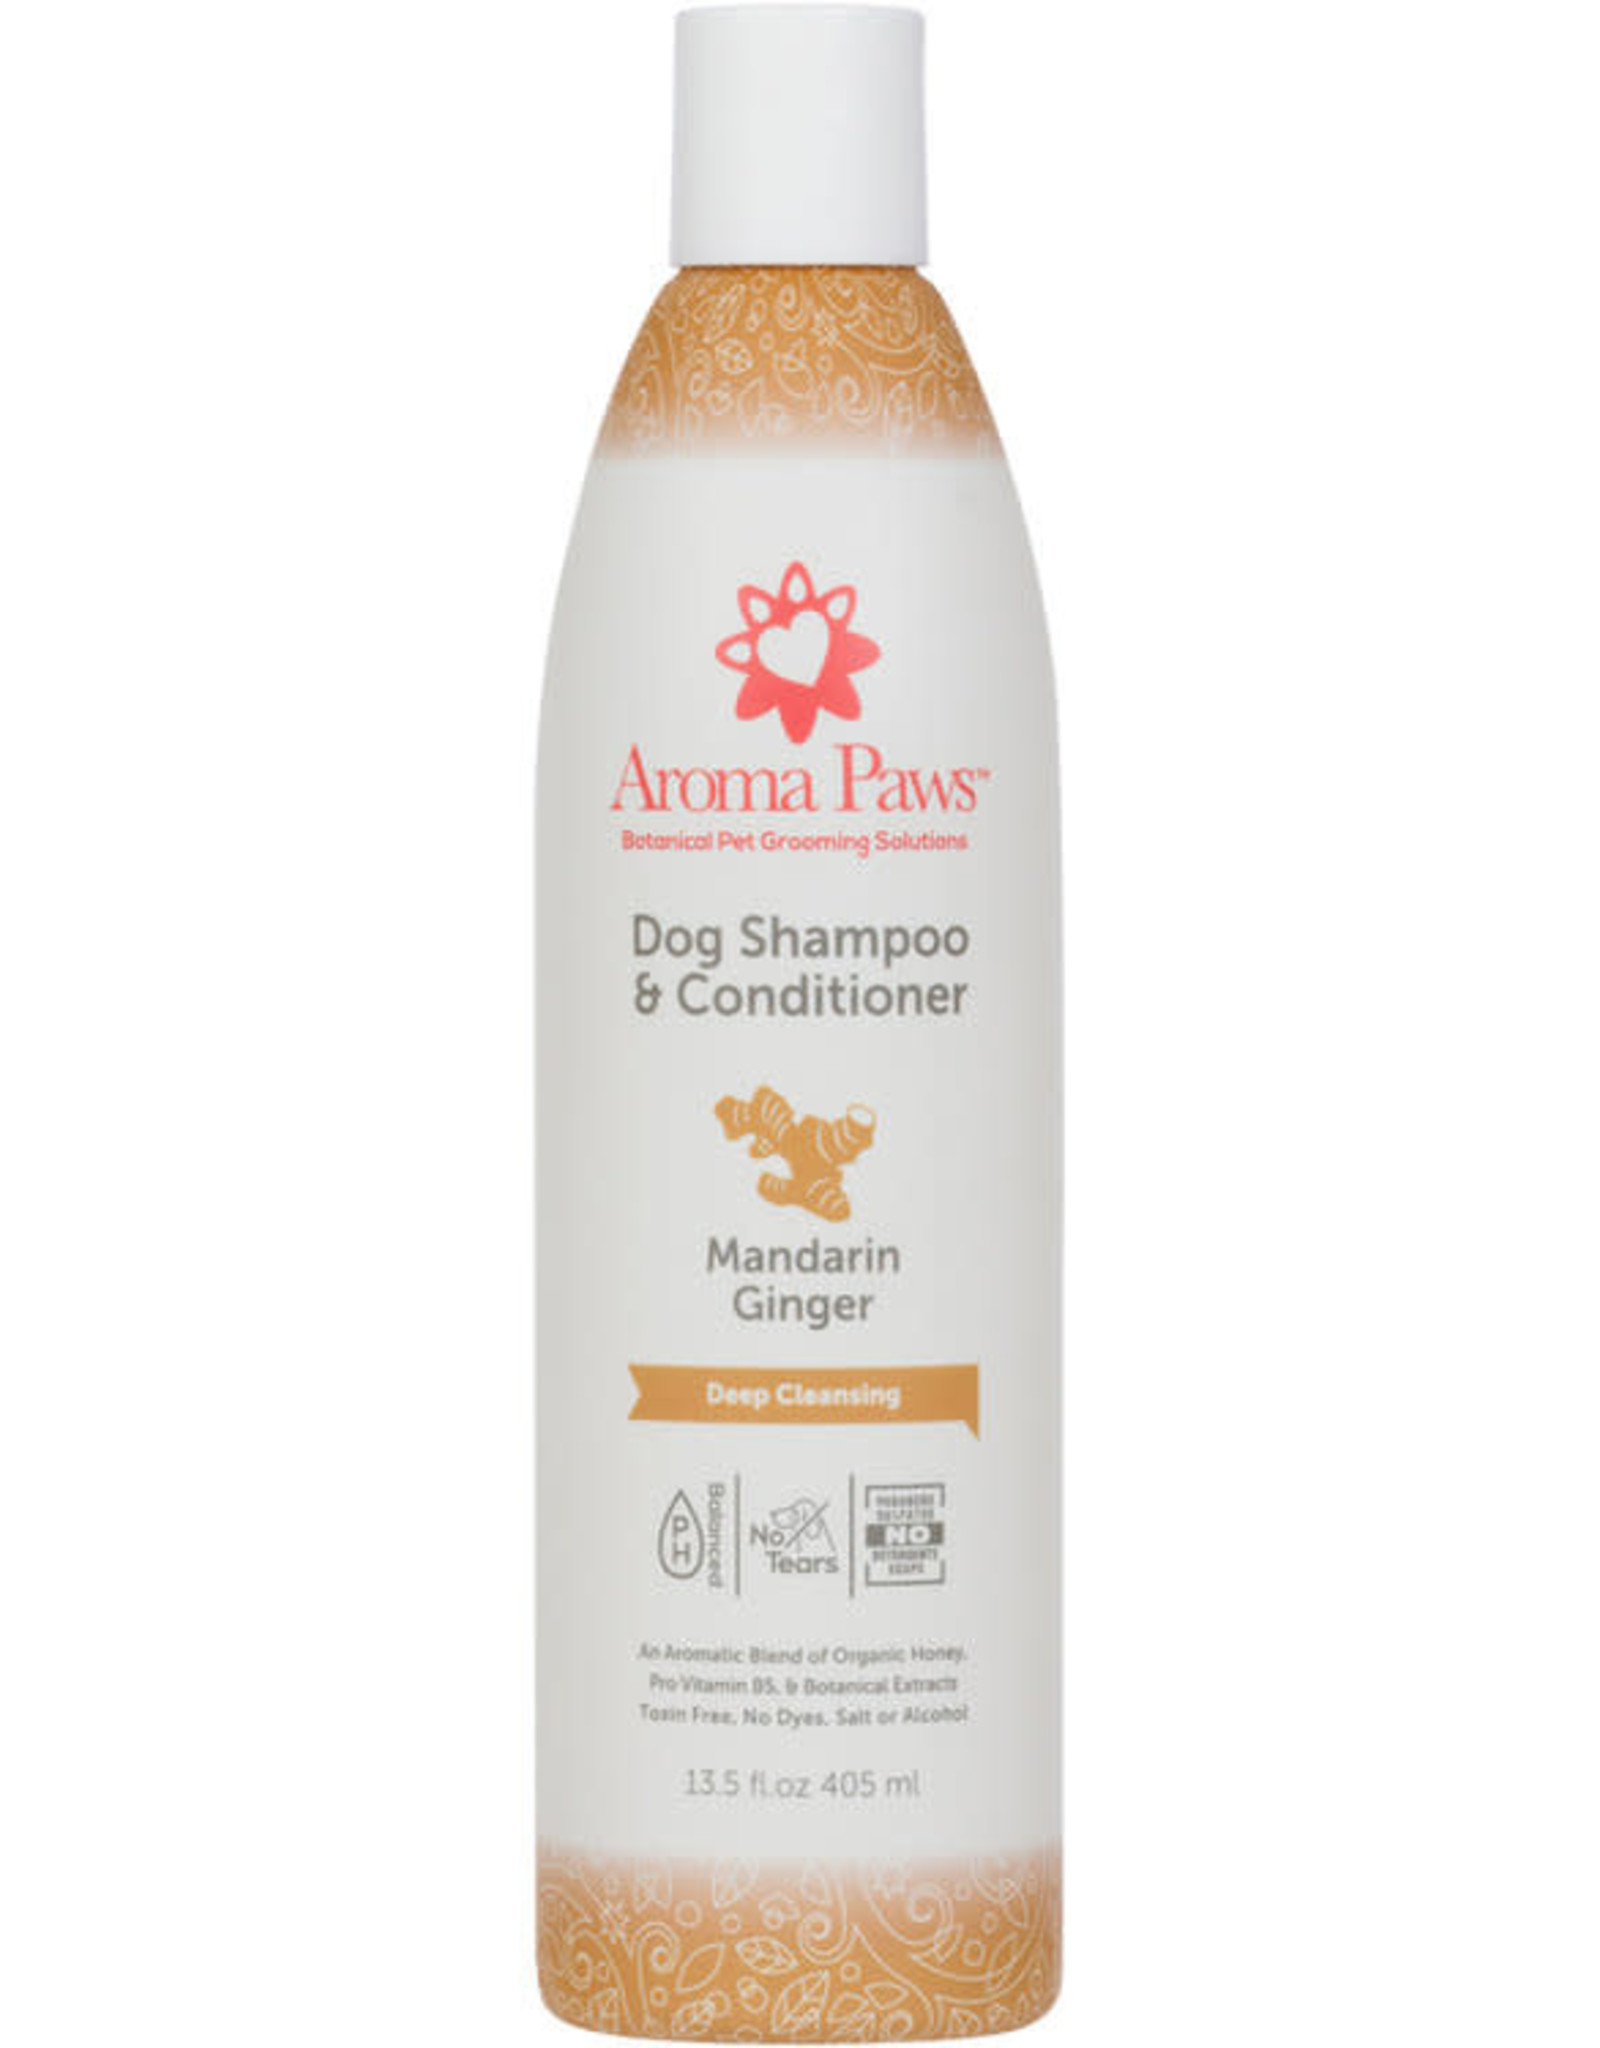 Aroma Paws Mandarin Ginger Shampoo & Conditioner 13.5oz